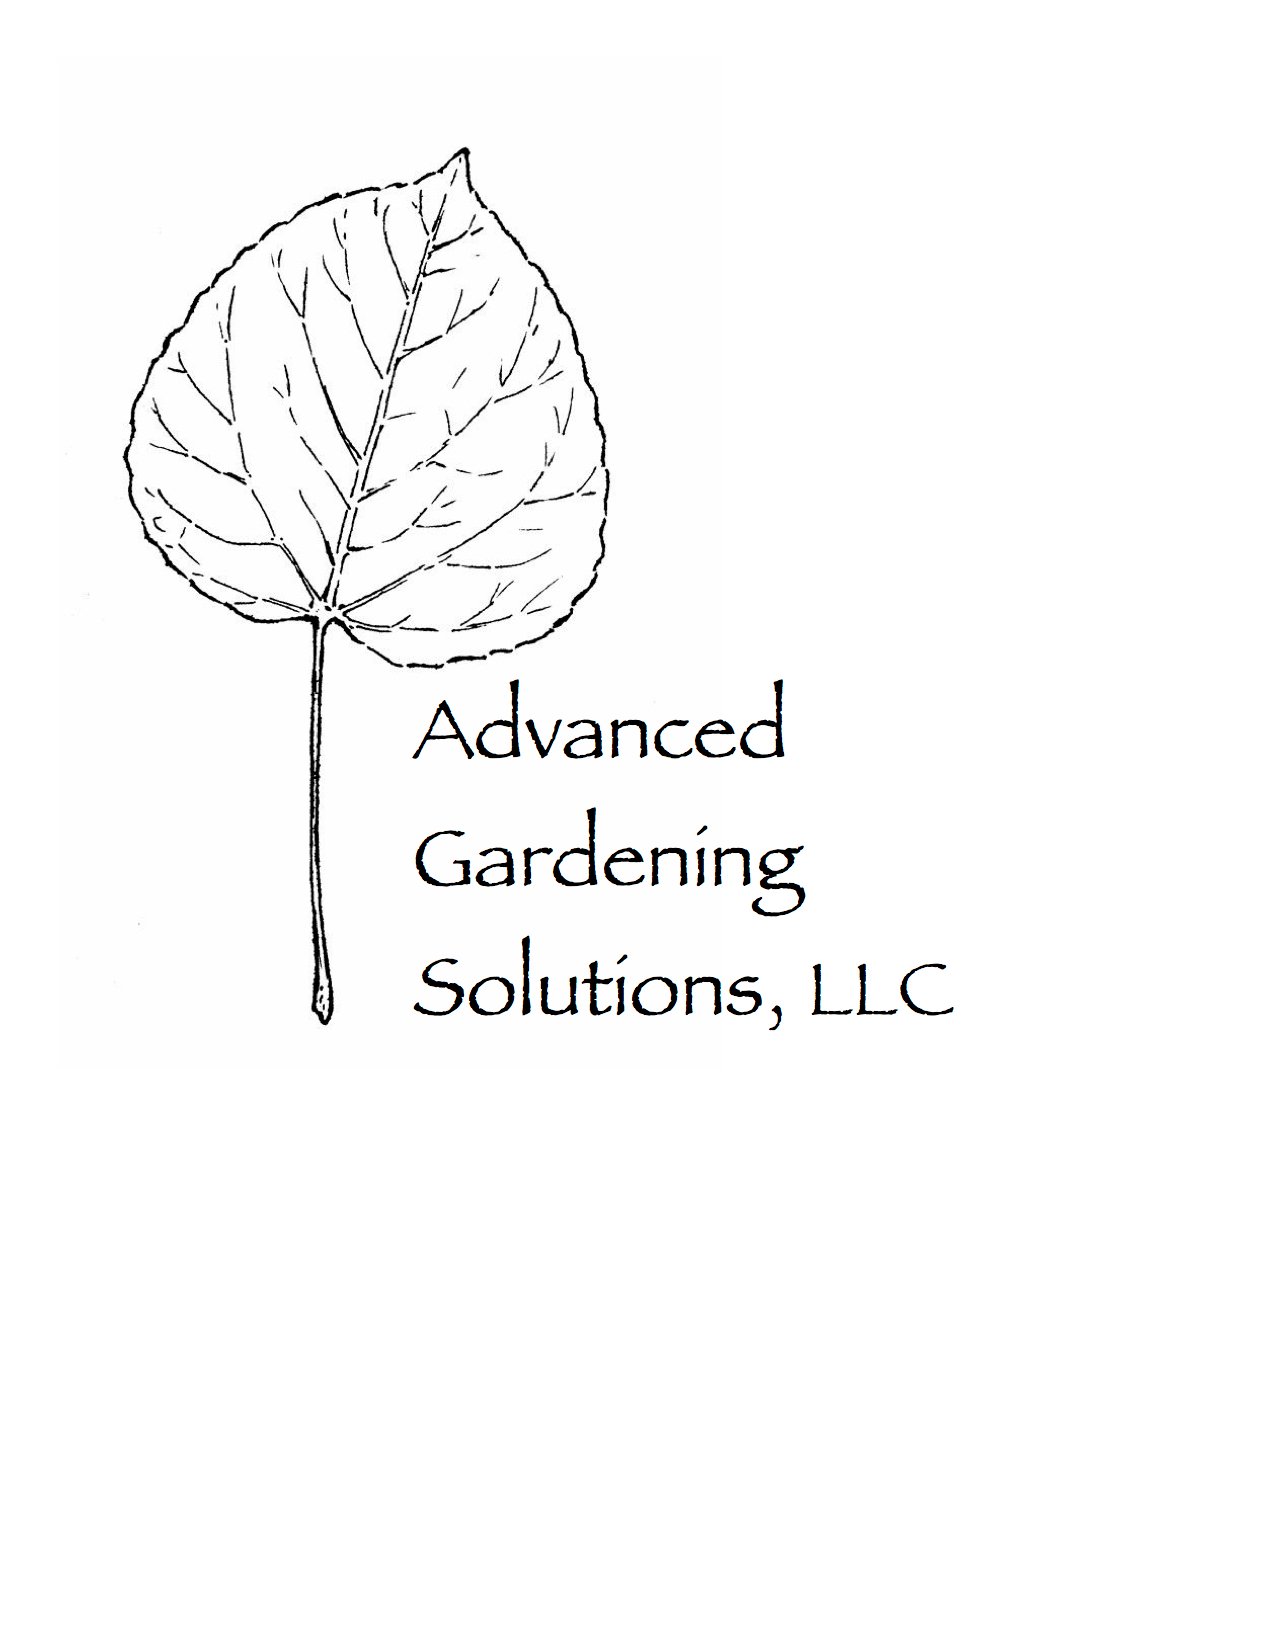 Advanced Gardening Solutions, LLC Logo